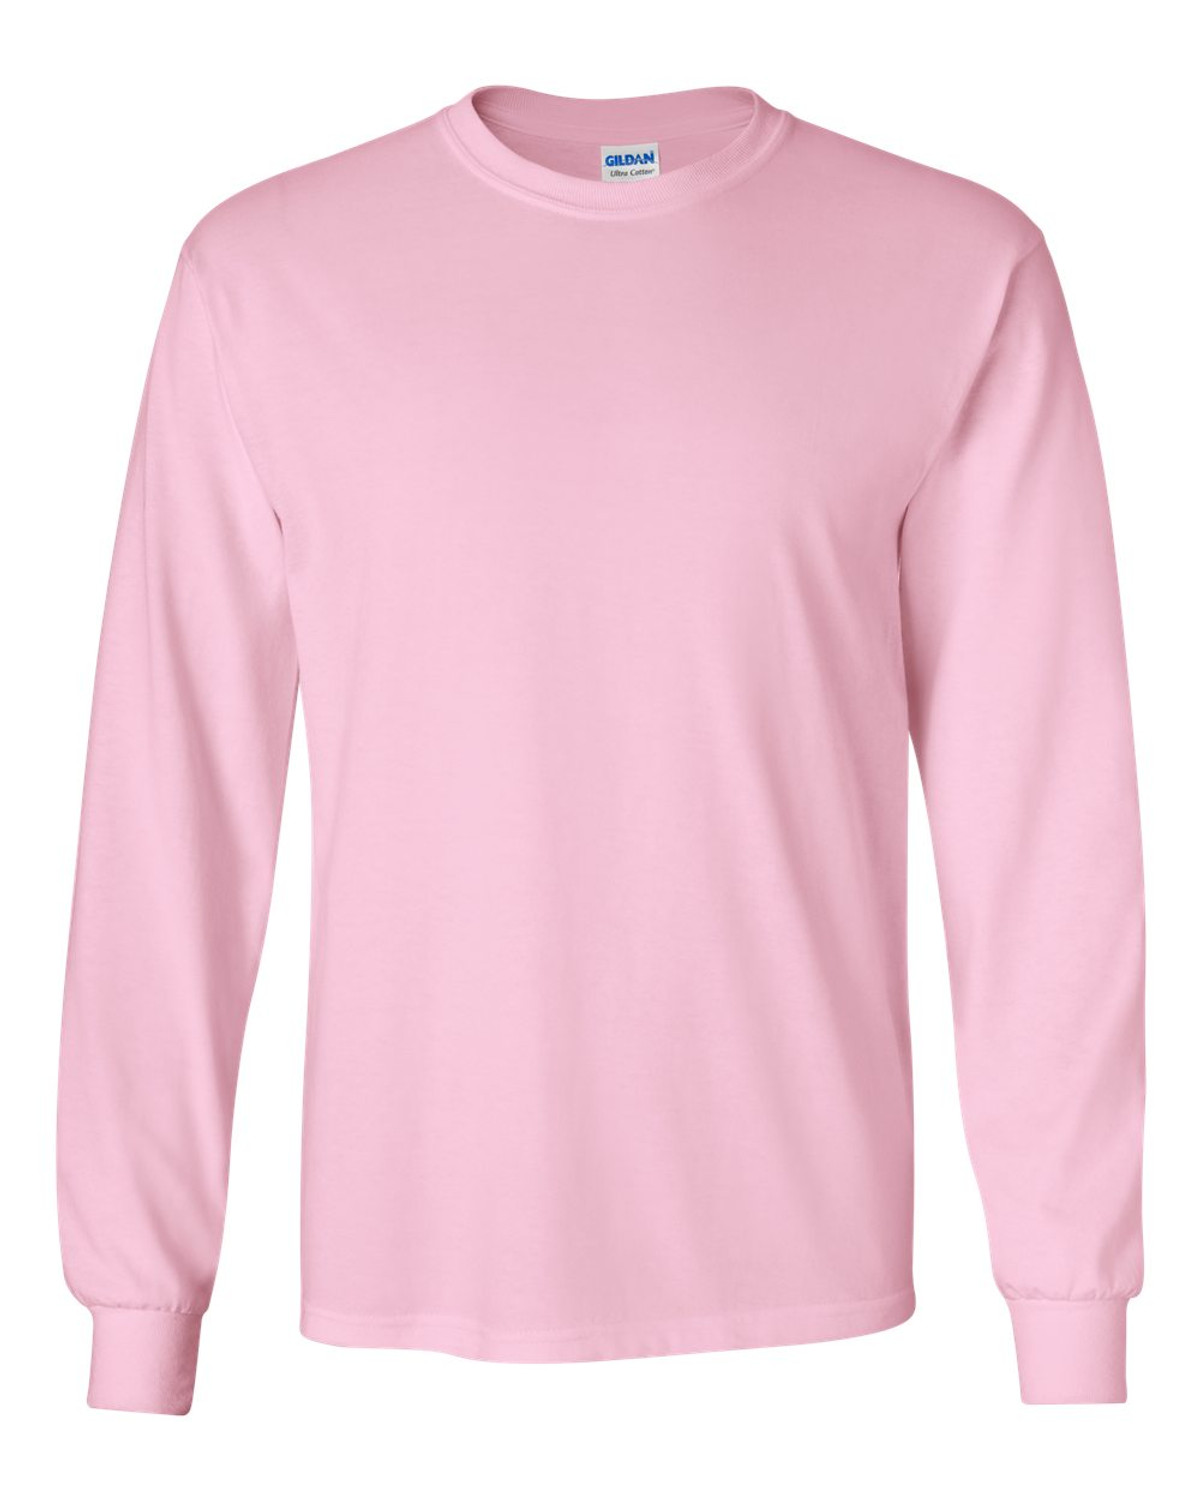 【Buy 4 Get 4th Free】Men's Long Sleeve Hooded Shirt UPF 50+ Athletic Shirts, Light Pink / L